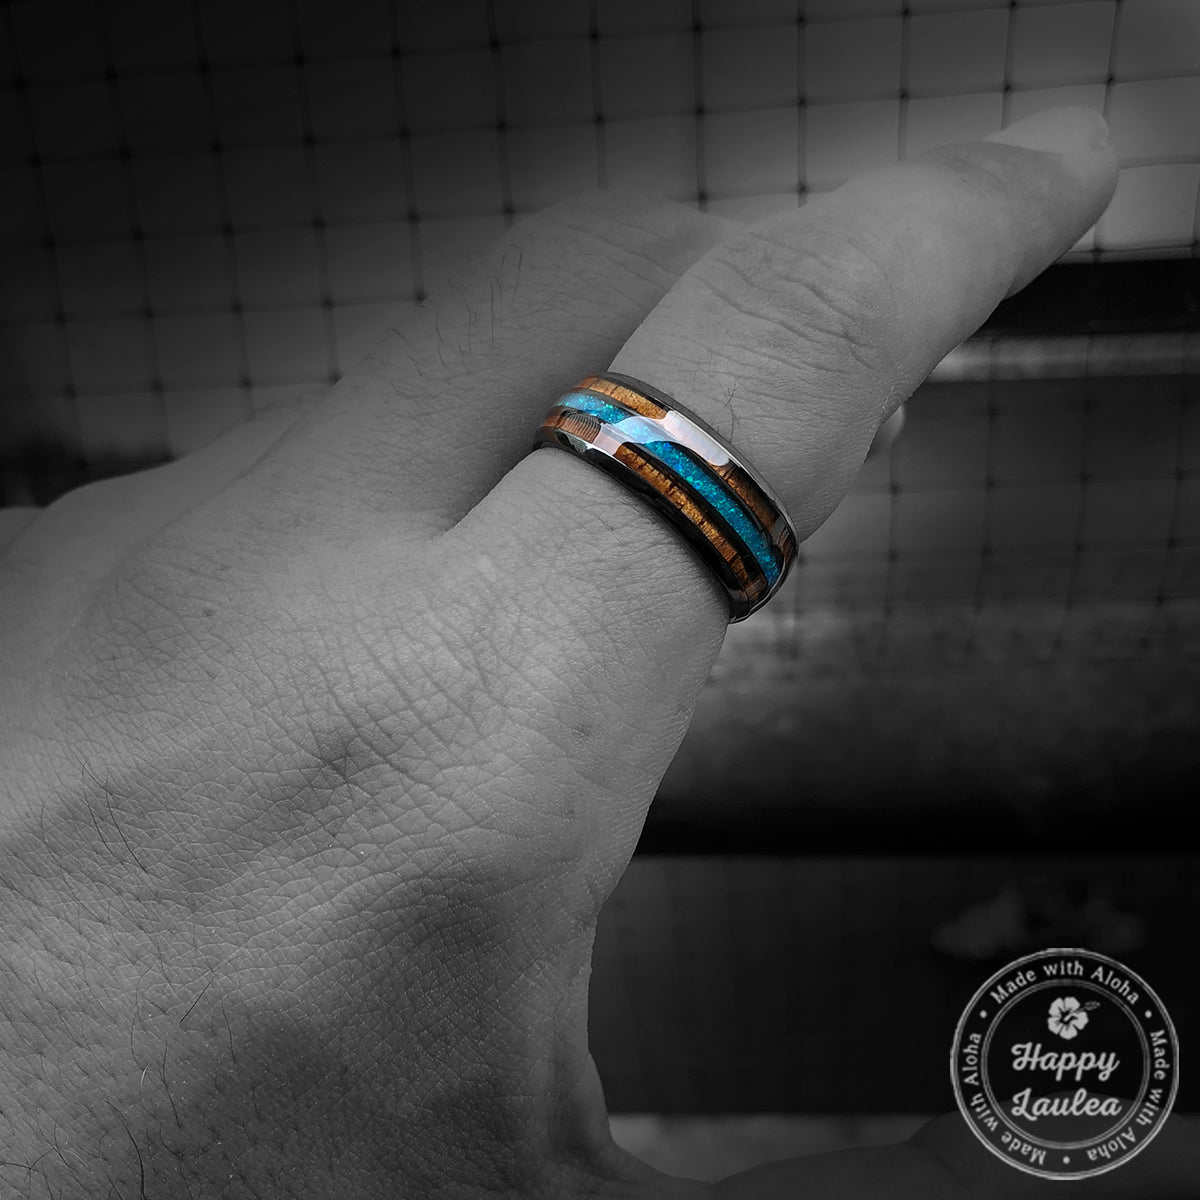 Black Zirconium 8mm Ring with Azure Blue Opal & Hawaiian Koa Wood - Dome Shape, Comfort Fitment